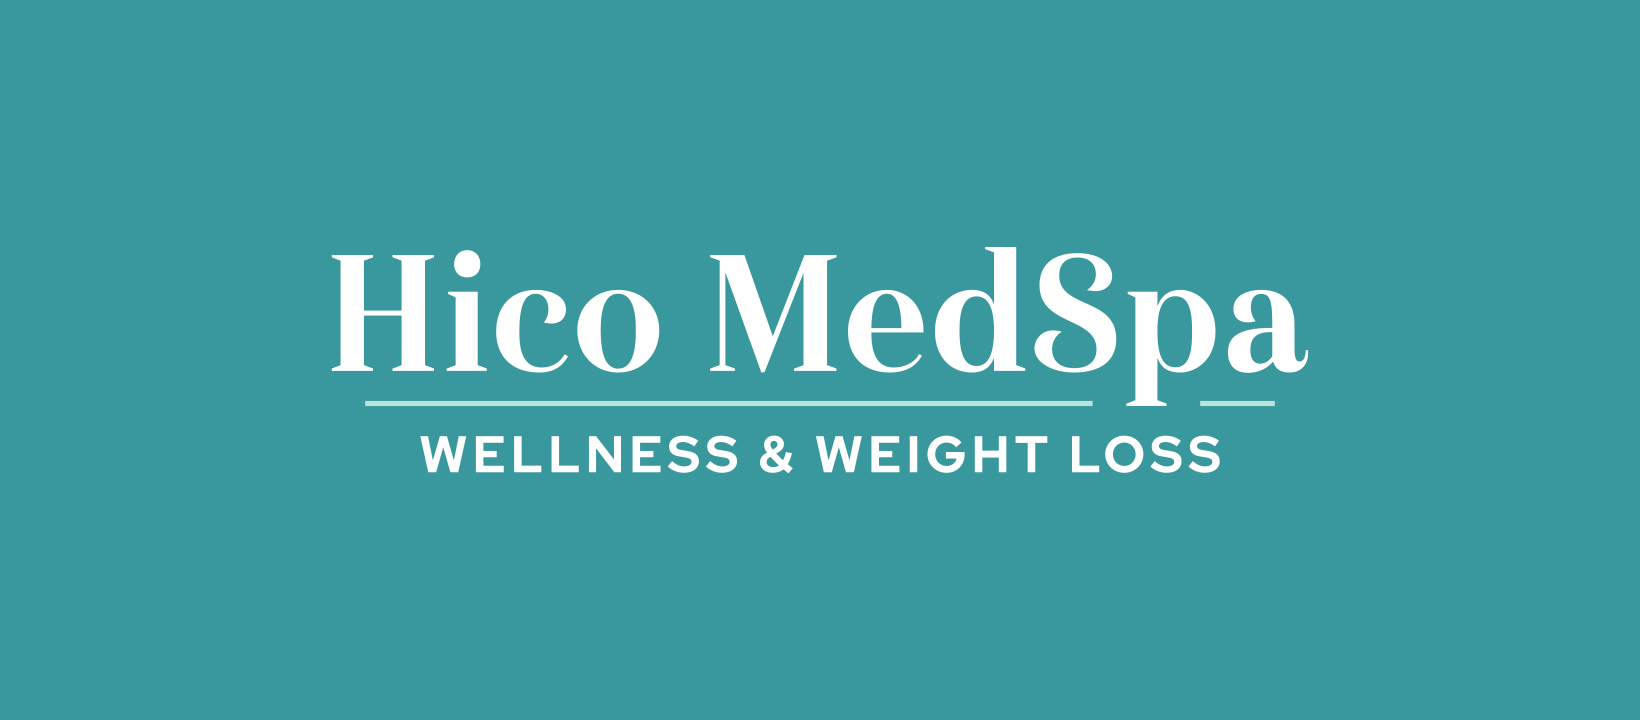 Hico MedSpa Wellness & Weight Loss